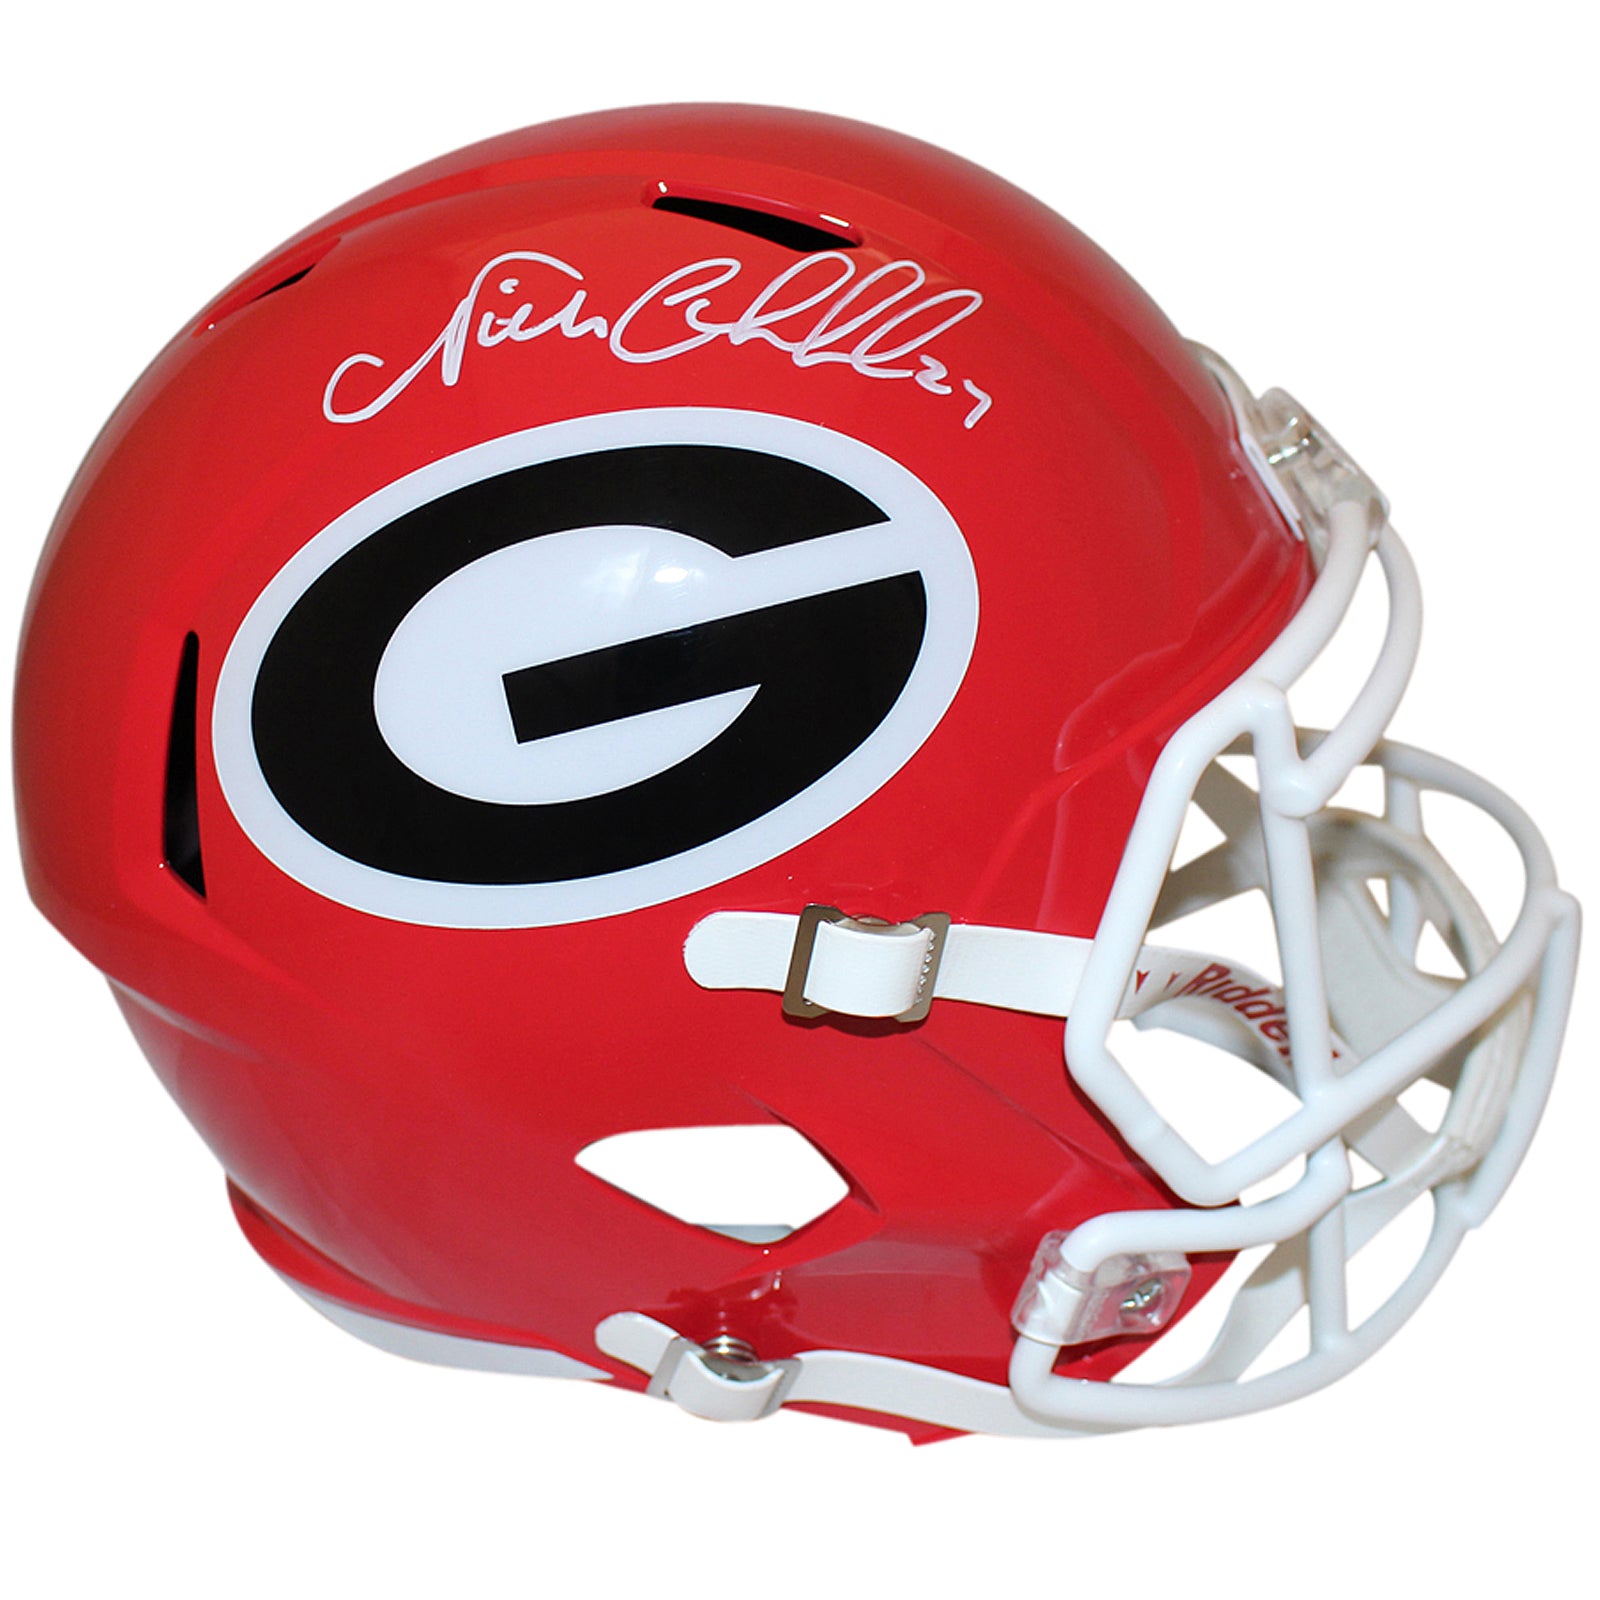 Nick Chubb Autographed Georgia Bulldogs Deluxe Full-Size Replica Helmet - Beckett